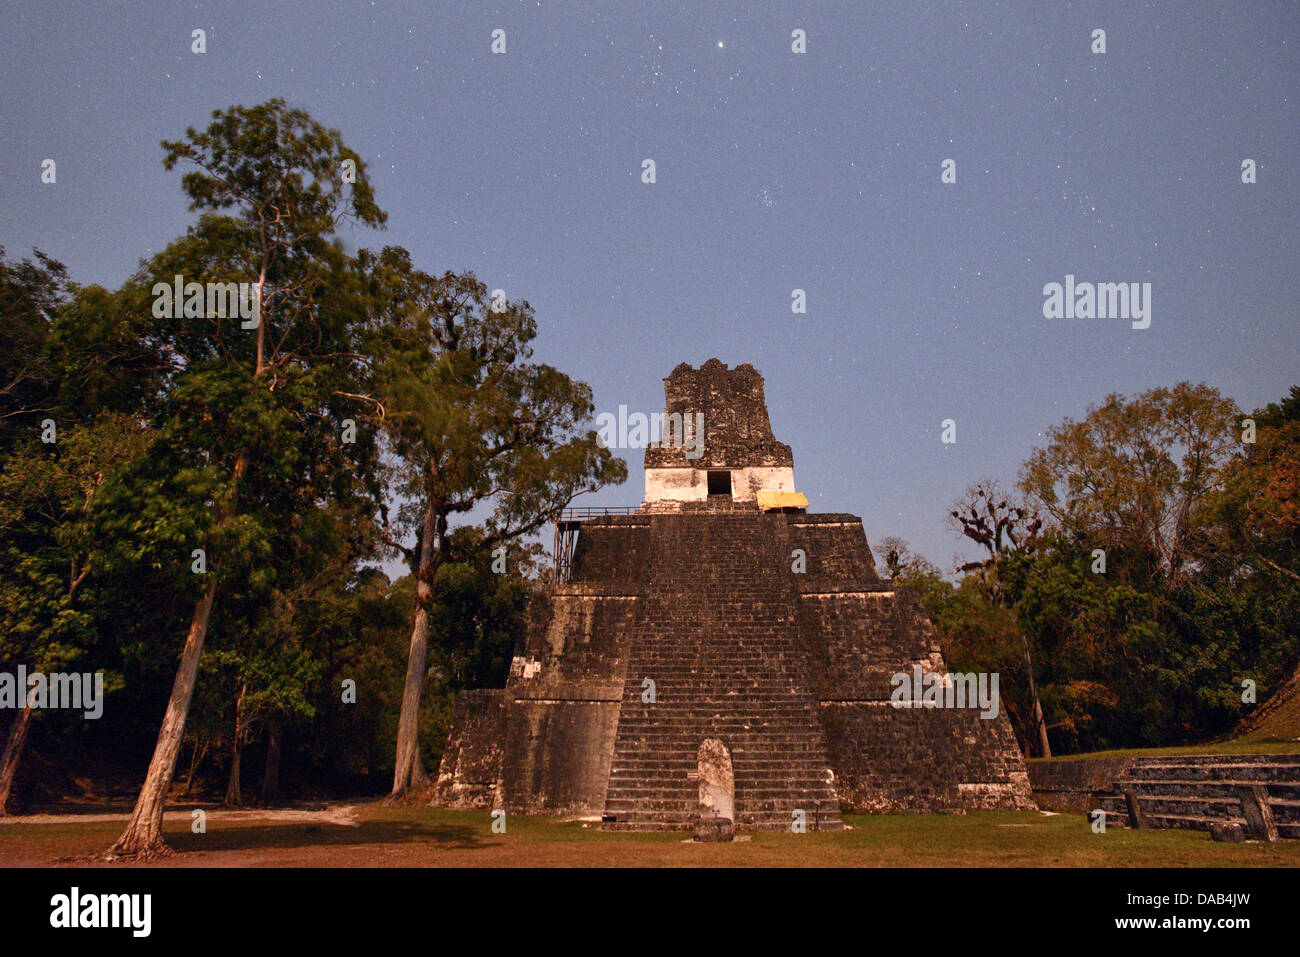 Mittelamerika, Guatemala, Petén, Mundo Maya, Maya, archäologische, UNESCO, Welterbe, Tikal, Dschungel, Pyramide, Meso-amerik. Stockfoto